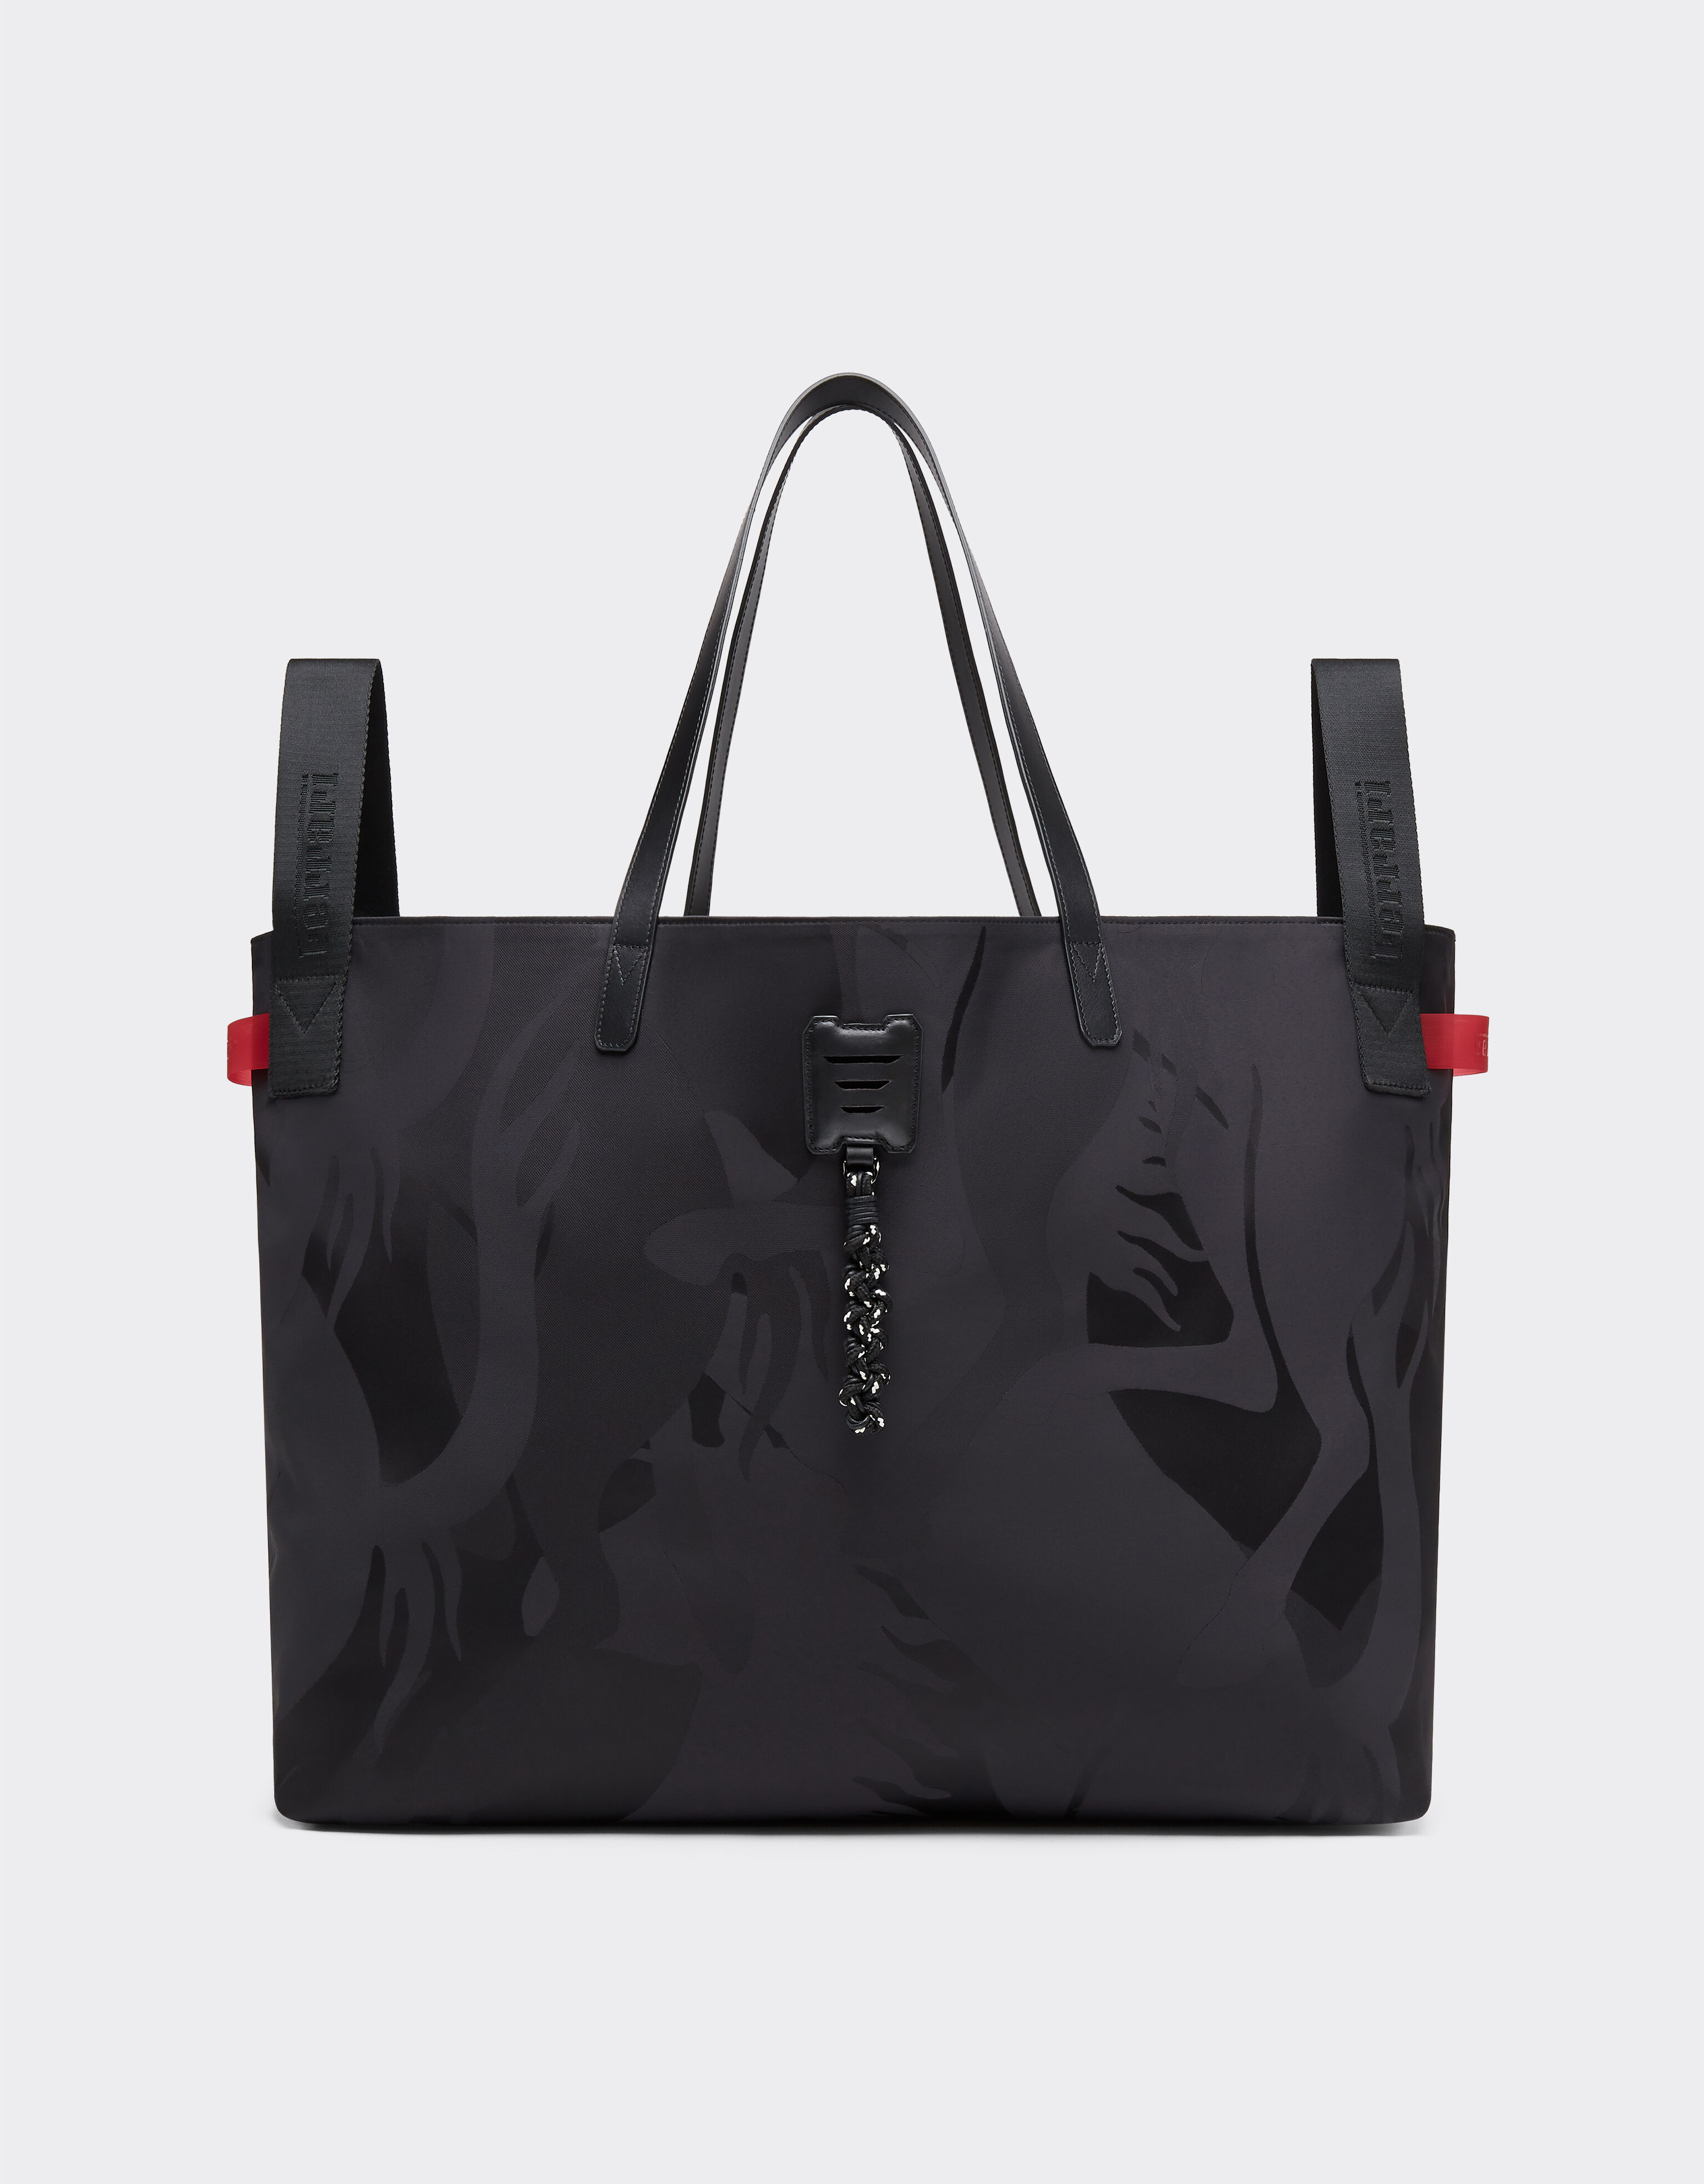 Ferrari Shopper bag in camouflage Prancing Horse nylon fabric Black 20587f